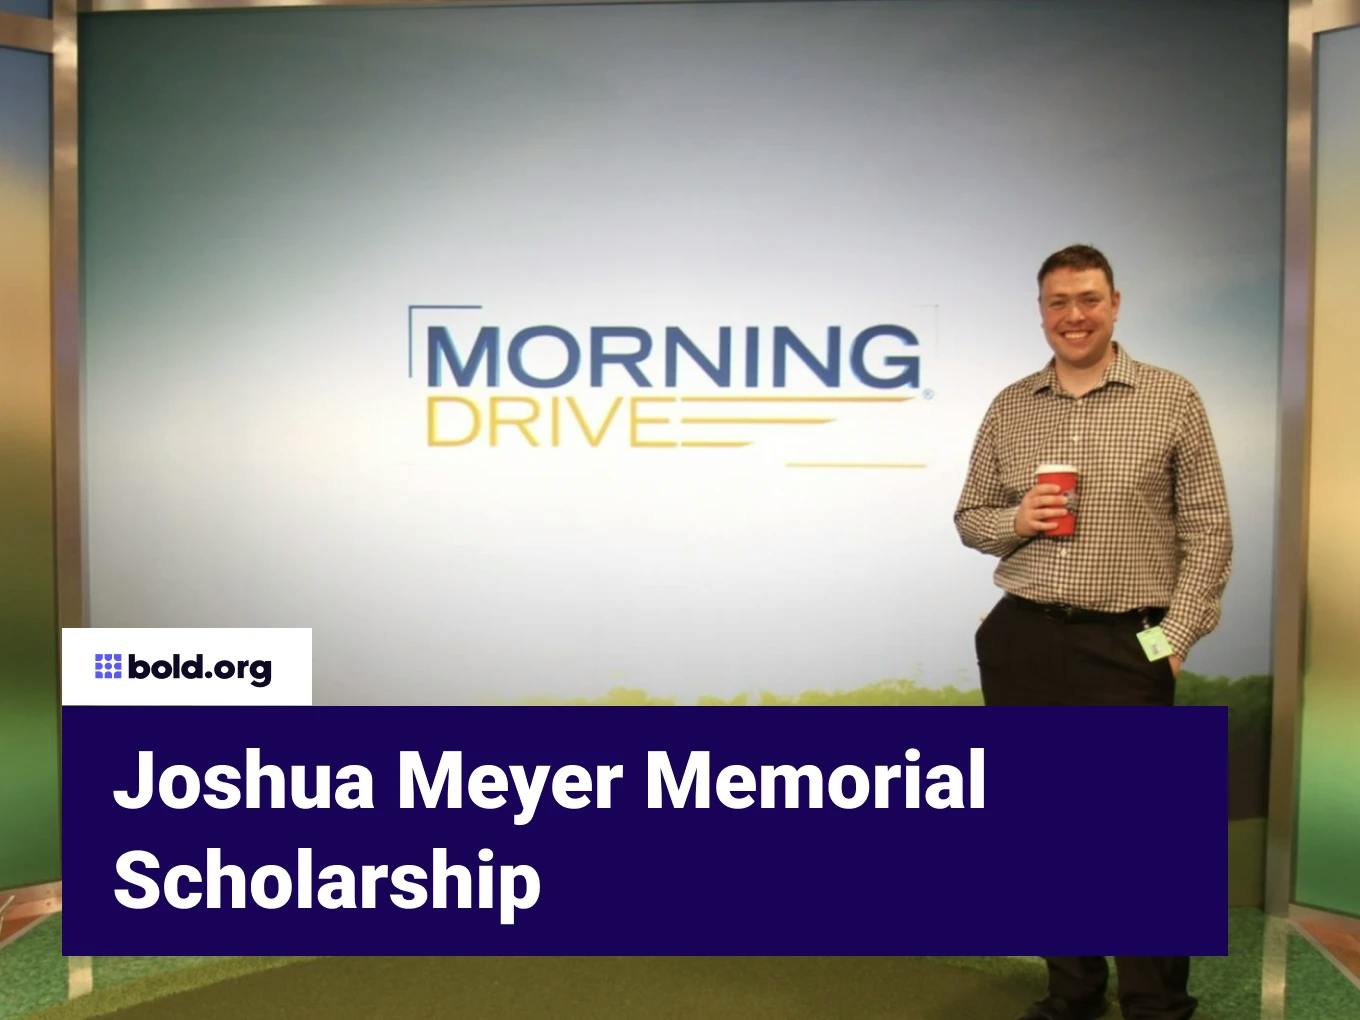 Joshua Meyer Memorial Scholarship